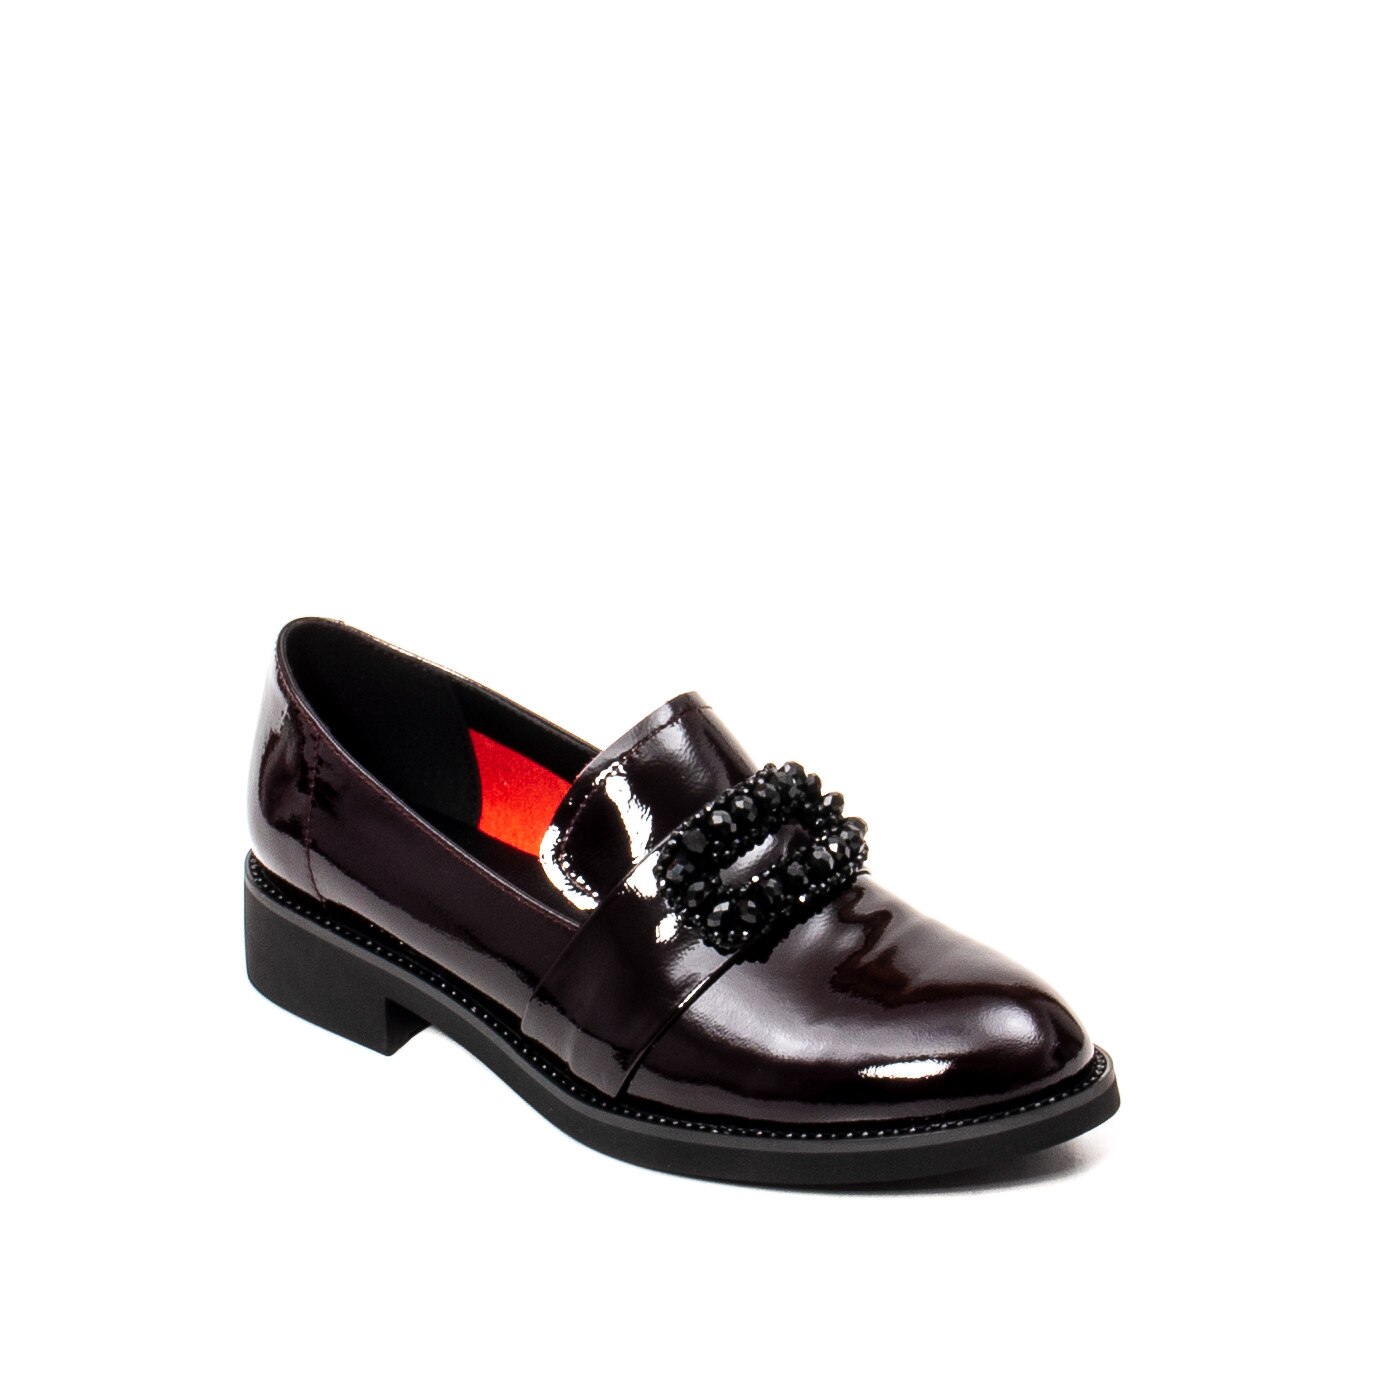 shop They are effective Pantofi casual dama, piele naturala lacuita, JIXS320 B Bordo inchis 38 EU -  eMAG.ro